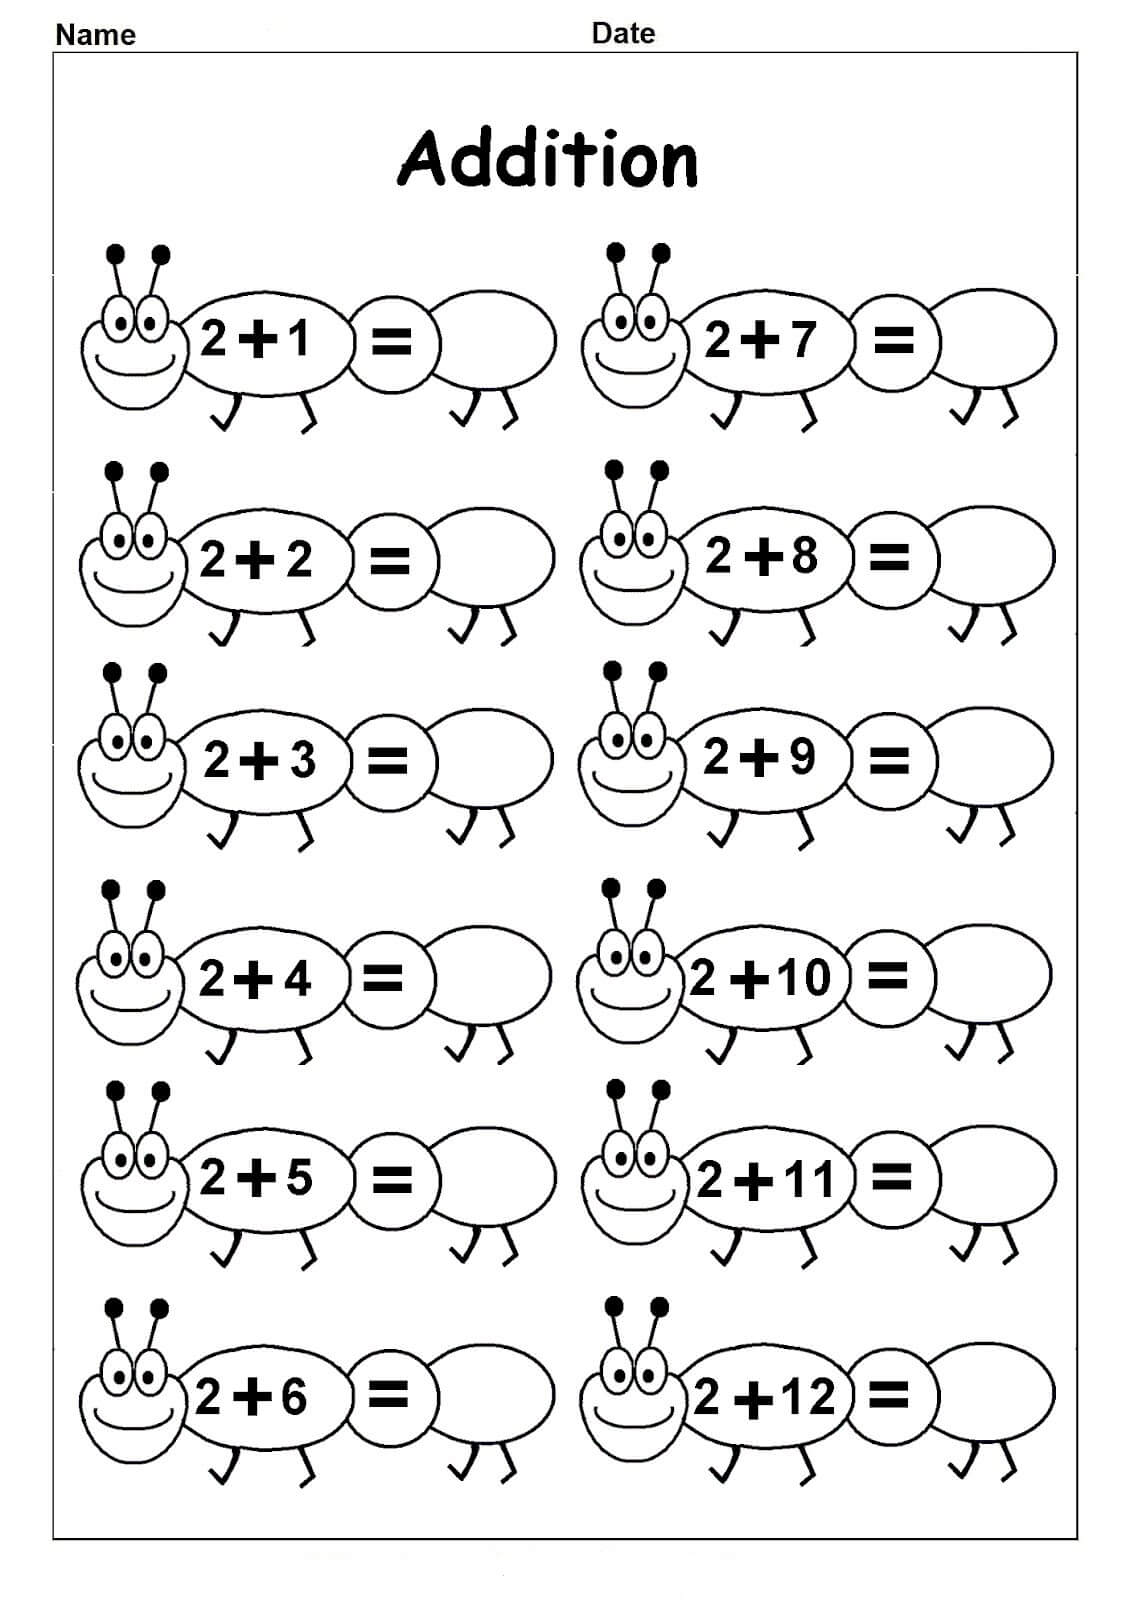 Kindergarten Math Worksheets Pdf To Printable 15 Kindergarten Math Worksheets Pdf Files To